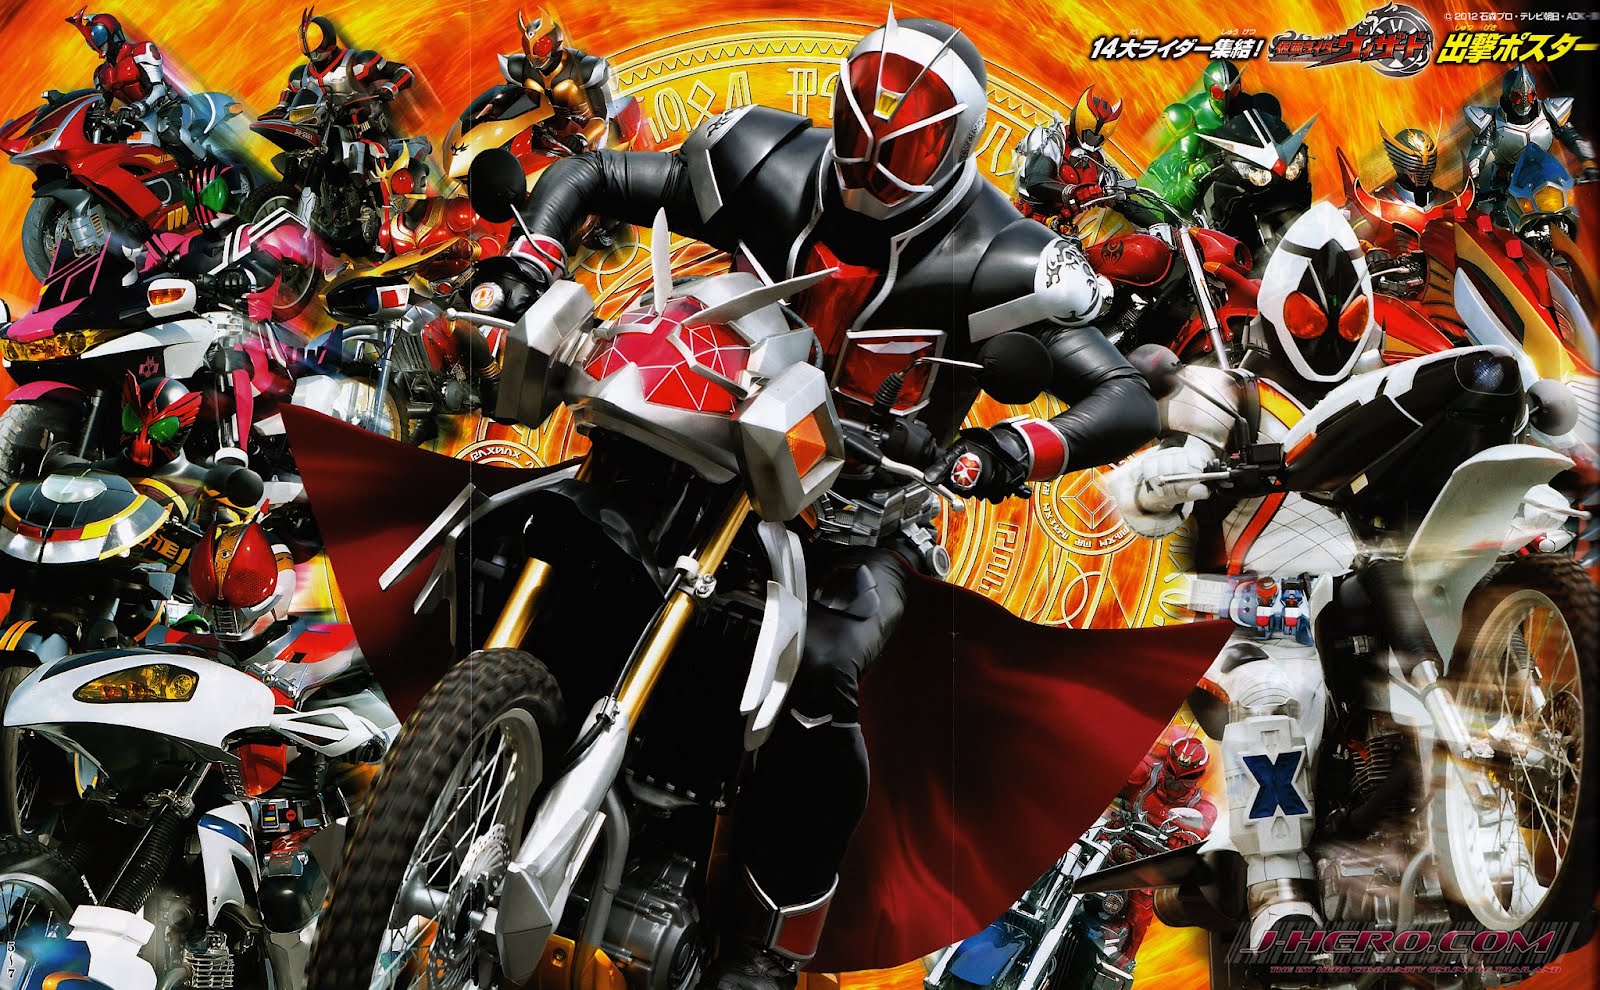 Download this Kamen Rider Wizard Contagem Regressiva Para Estreia picture